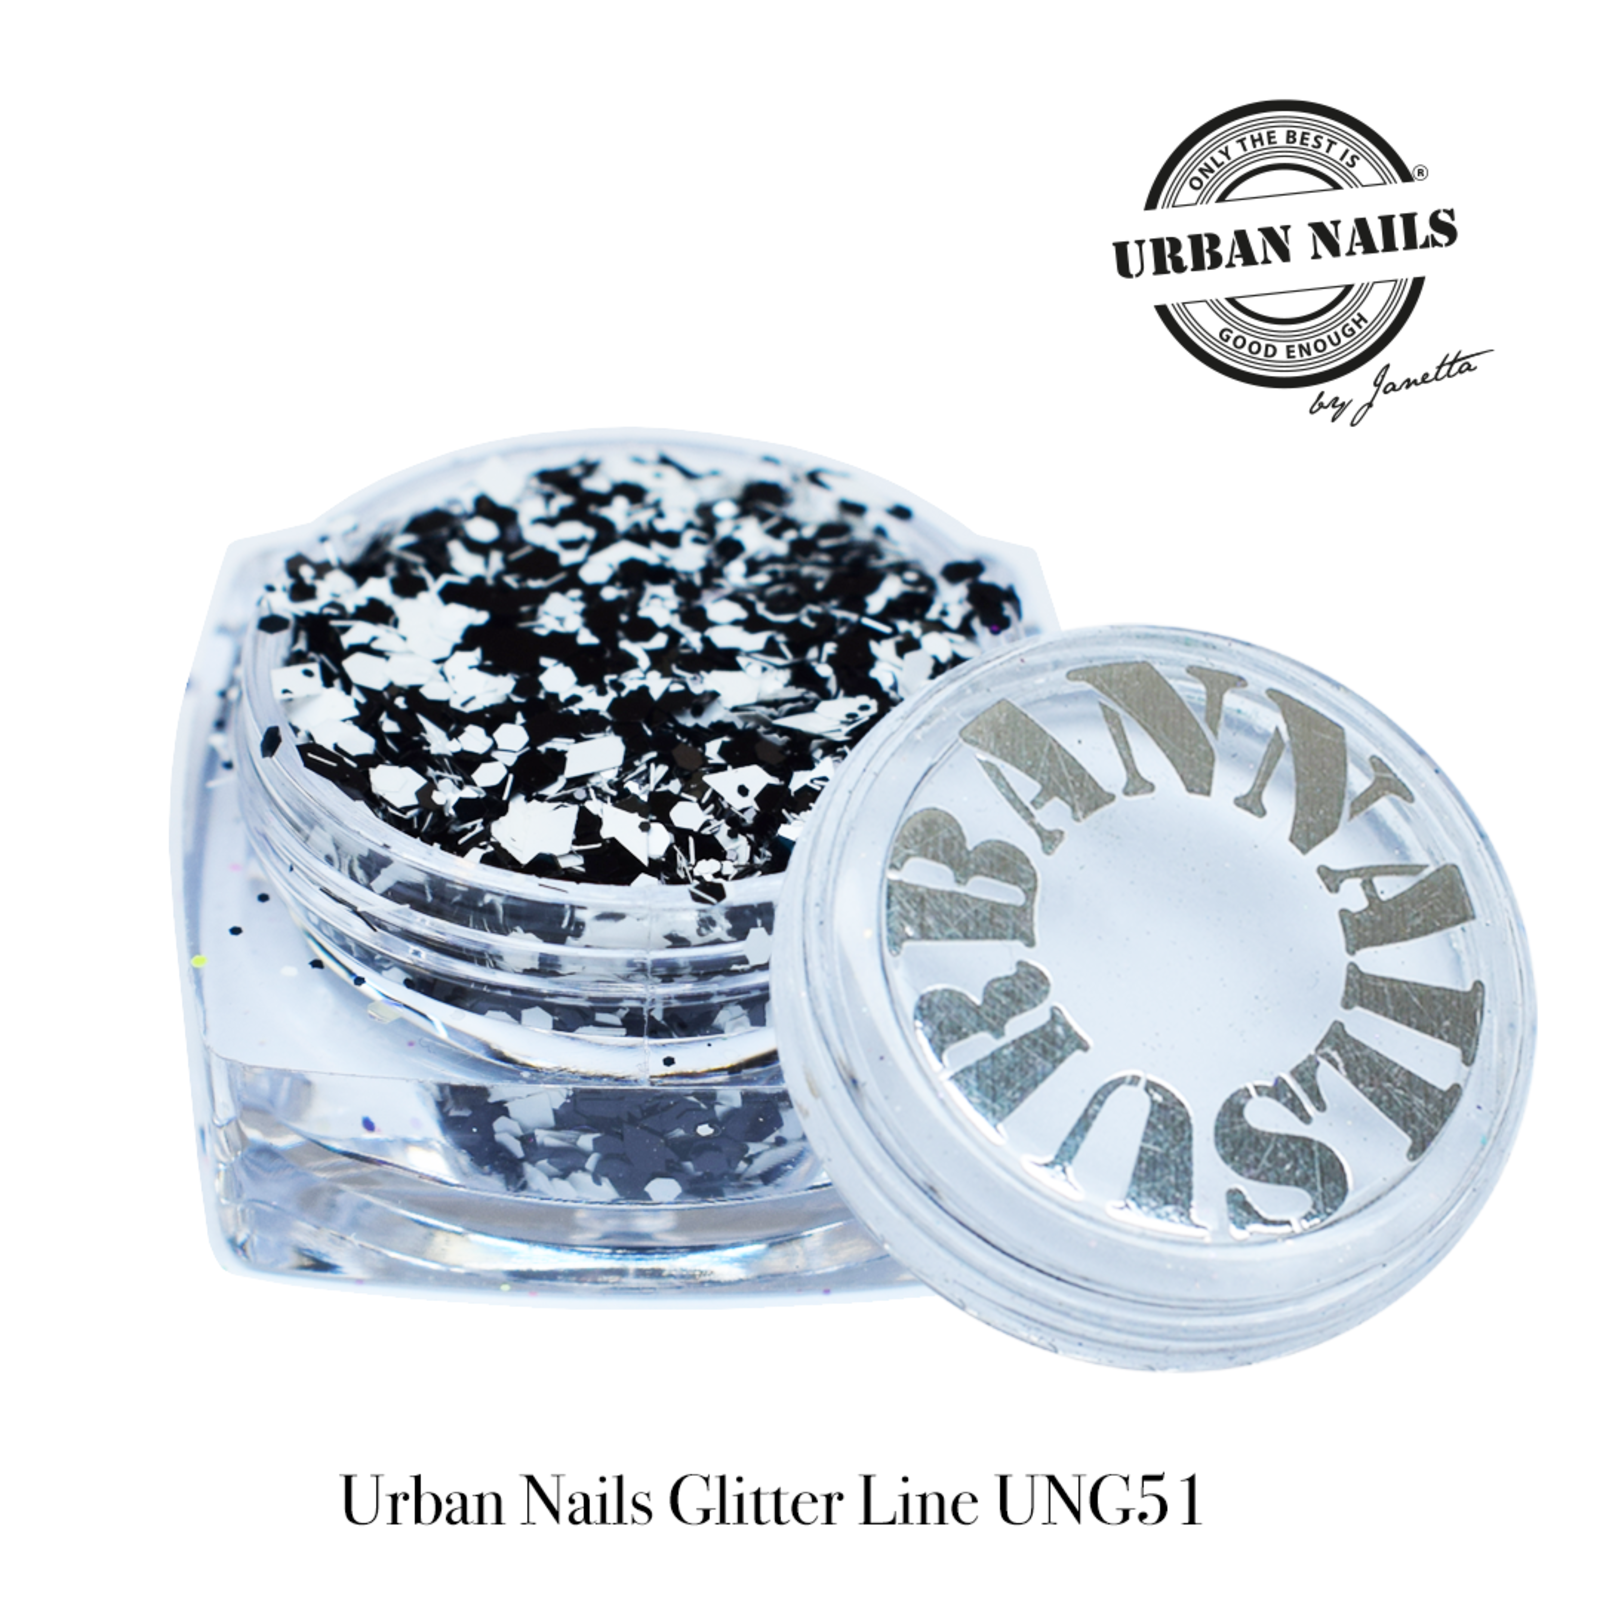 Urban nails Glitter Line UNG51